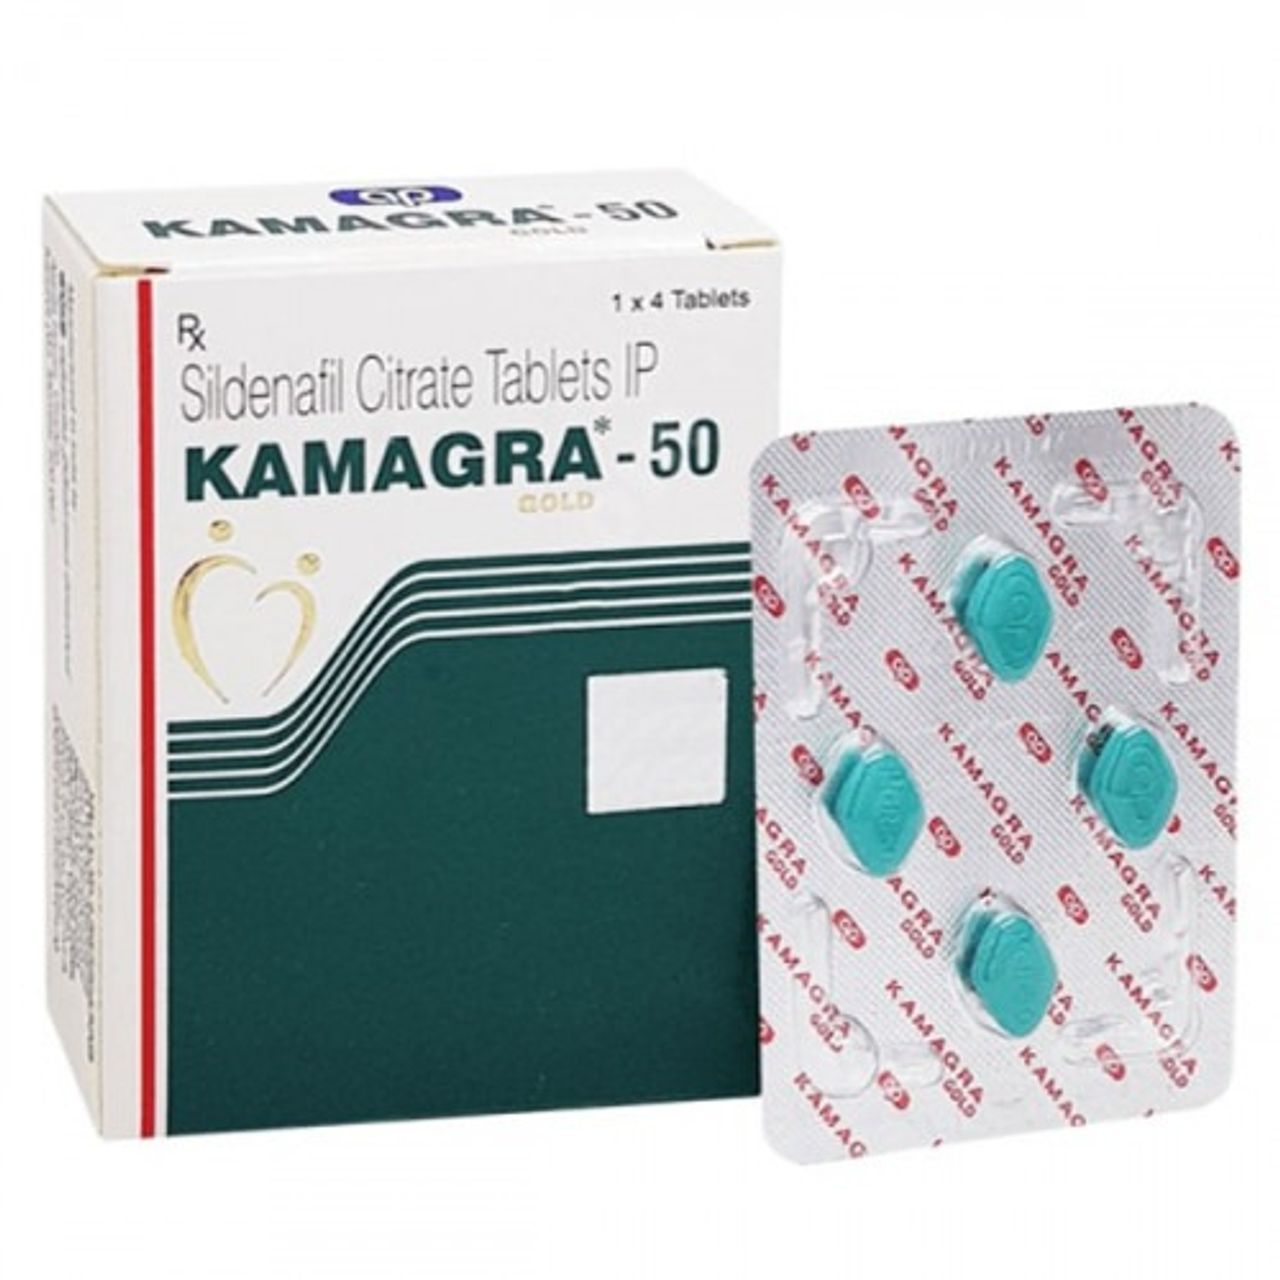 Kamagraa50